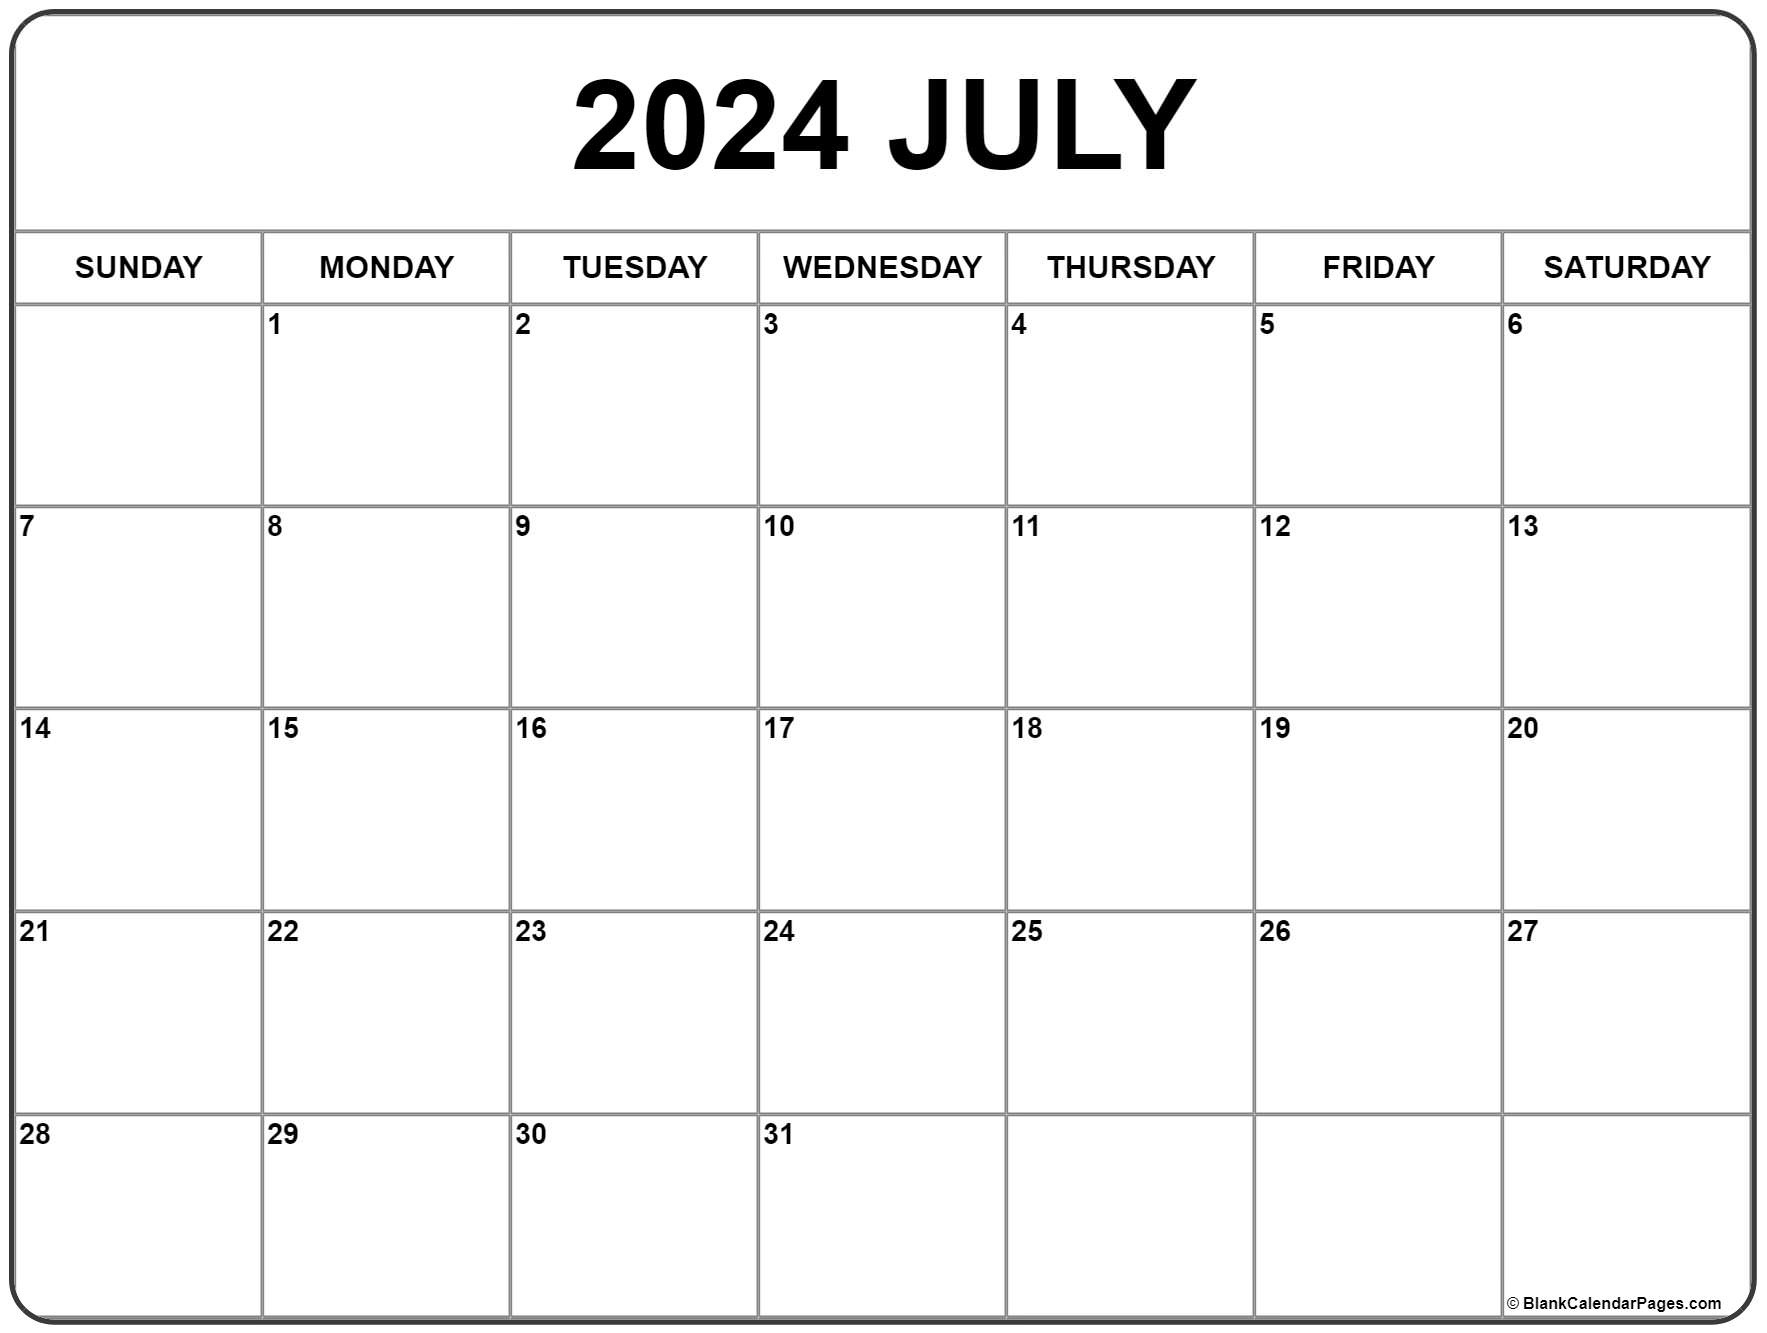 July 2024 Calendar | Free Printable Calendar throughout Blank July 2024 Calendar